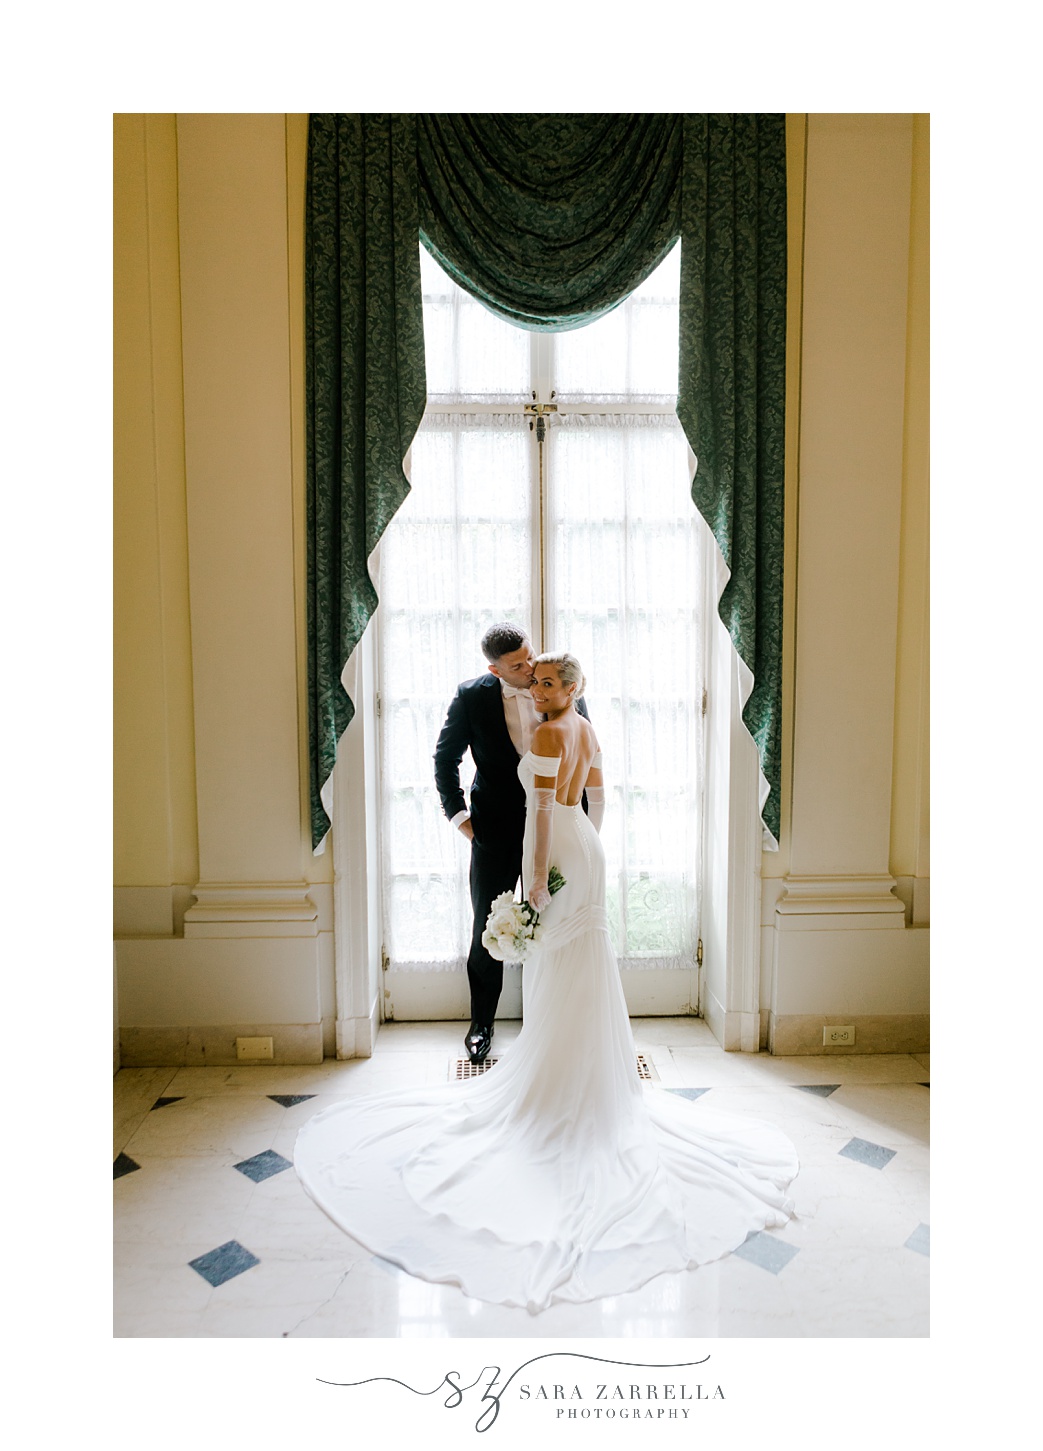 newlyweds hug in window under draped curtain at Glen Manor House